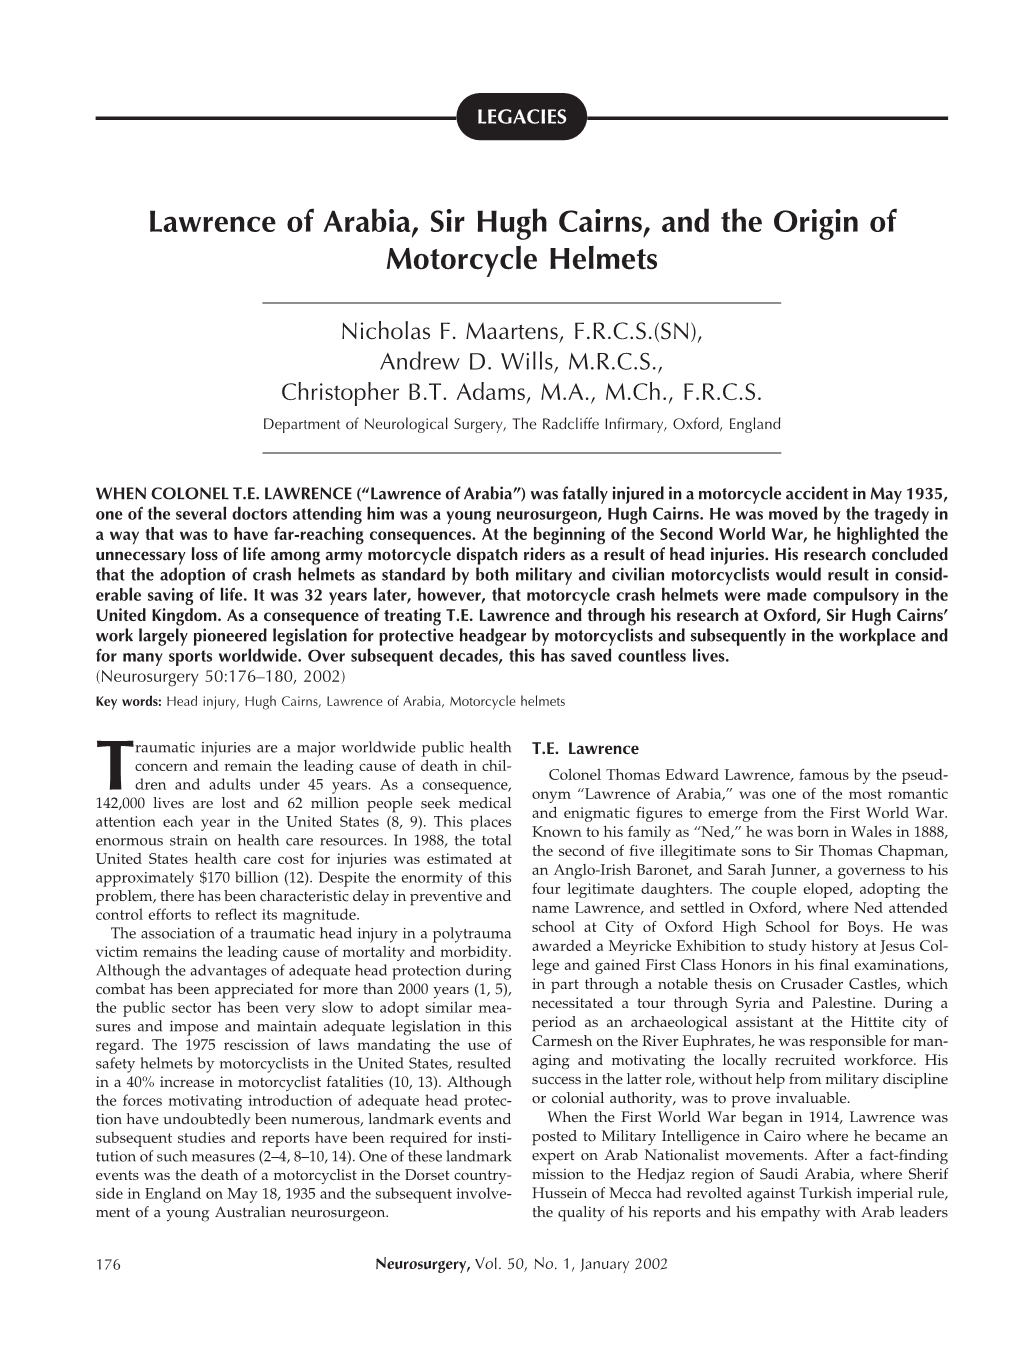 Lawrence of Arabia, Sir Hugh Cairns, and the Origin of Motorcycle Helmets